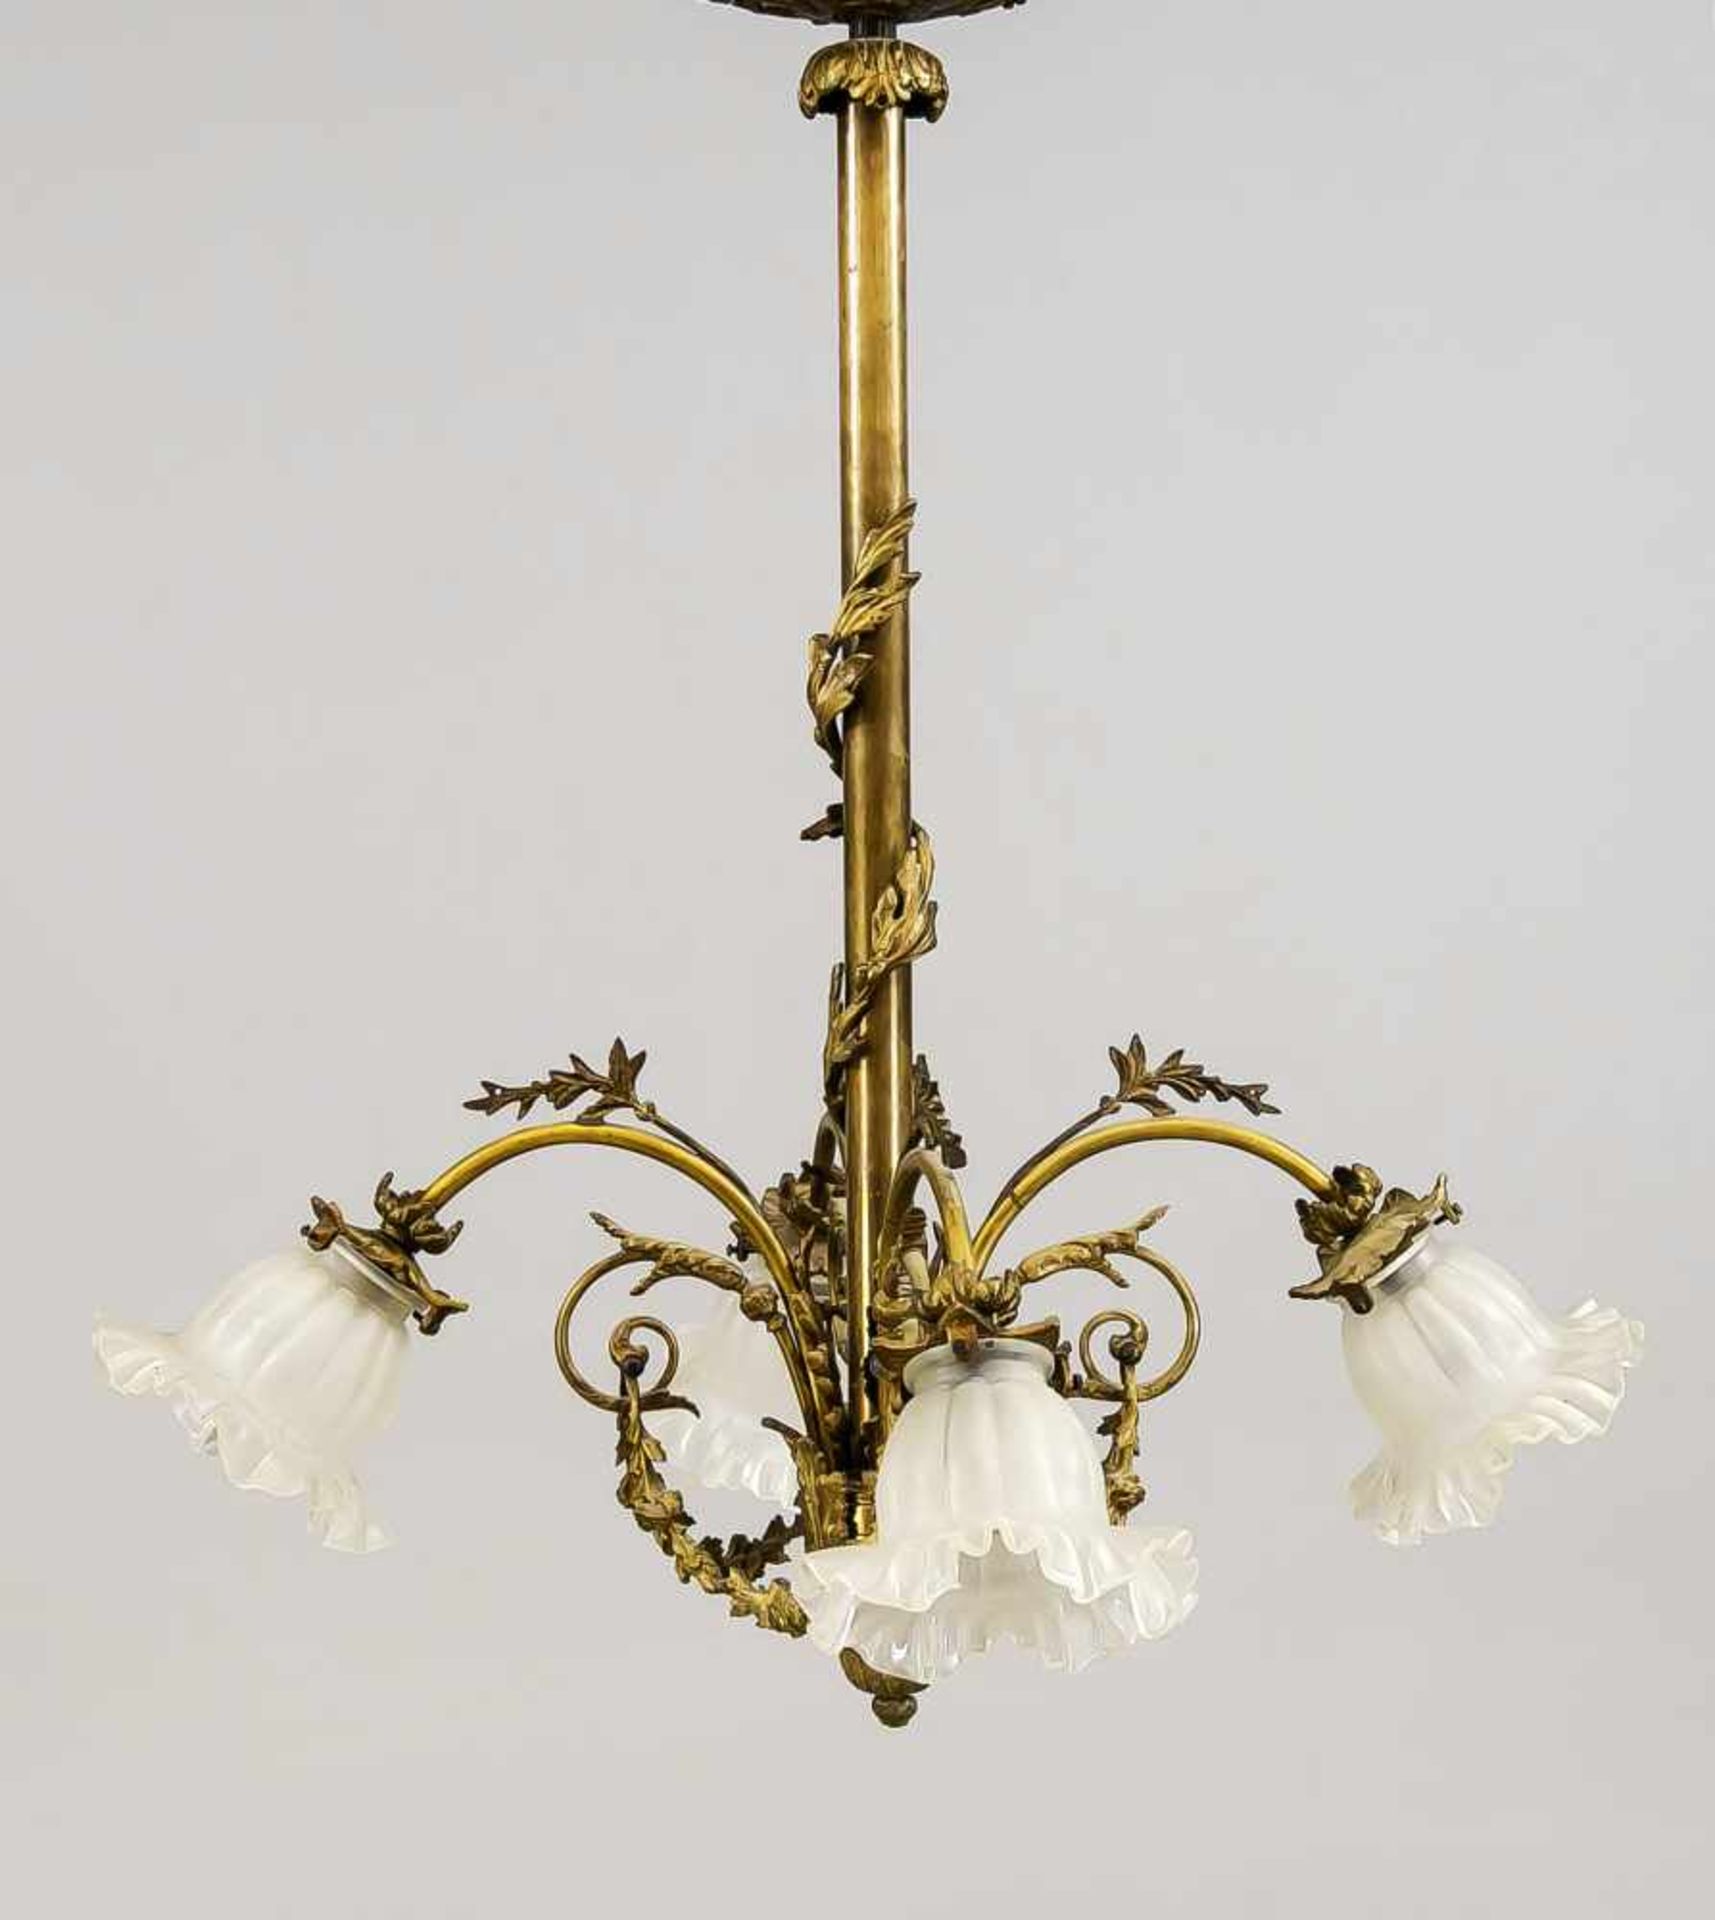 Historismus Deckenlampe, Ende 19. Jh., Bronze, Messing, mit Restvergoldung. Glatter Schaft